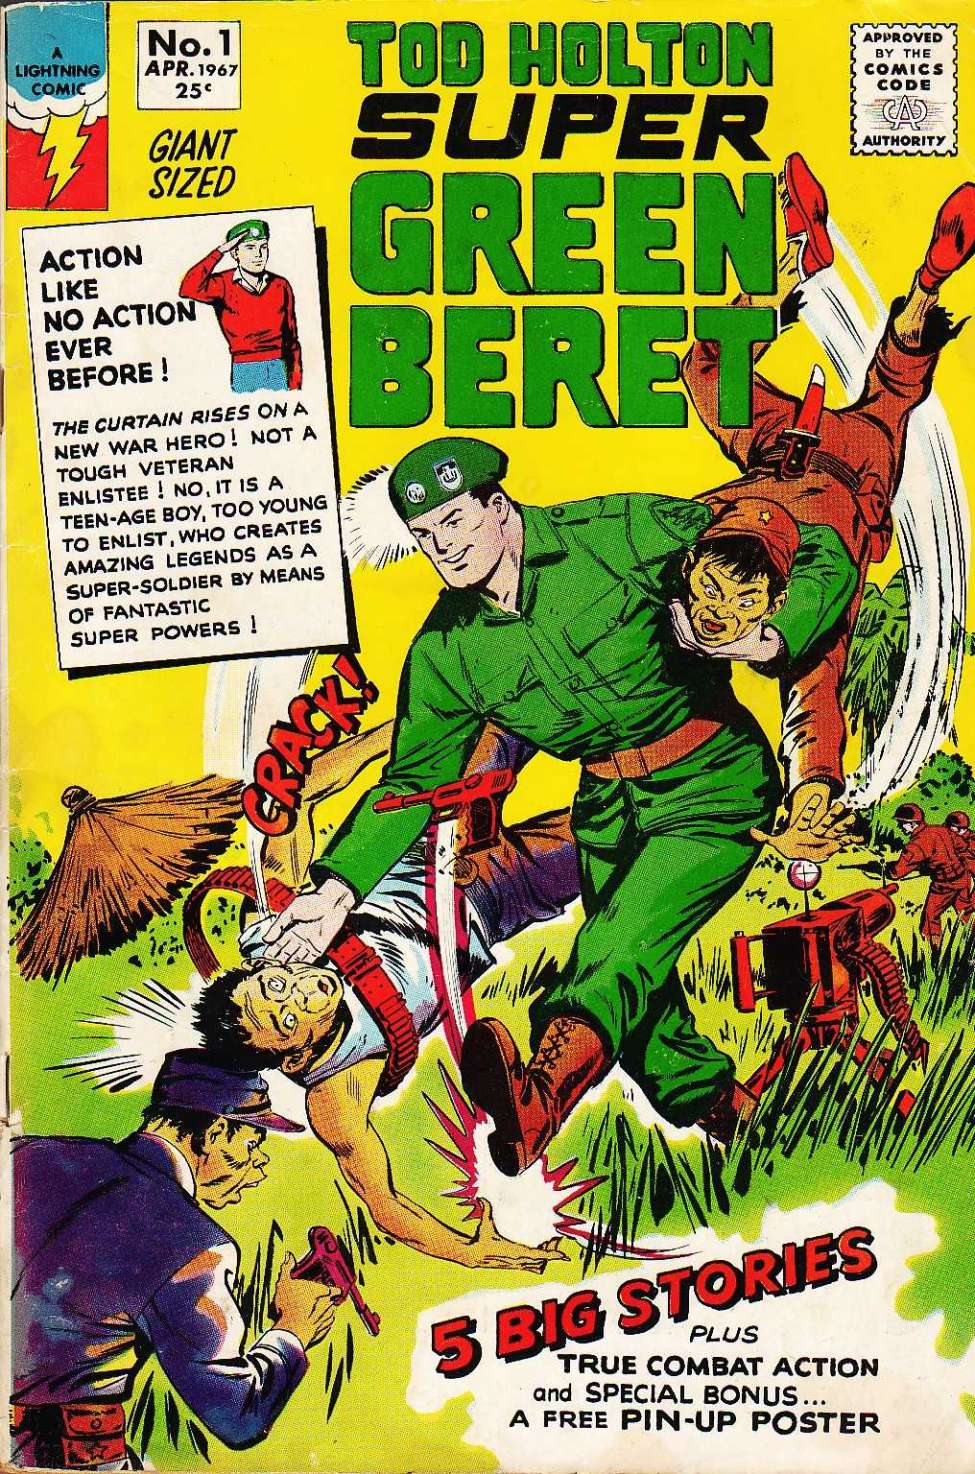 Superhéroes - Beret. COVER 